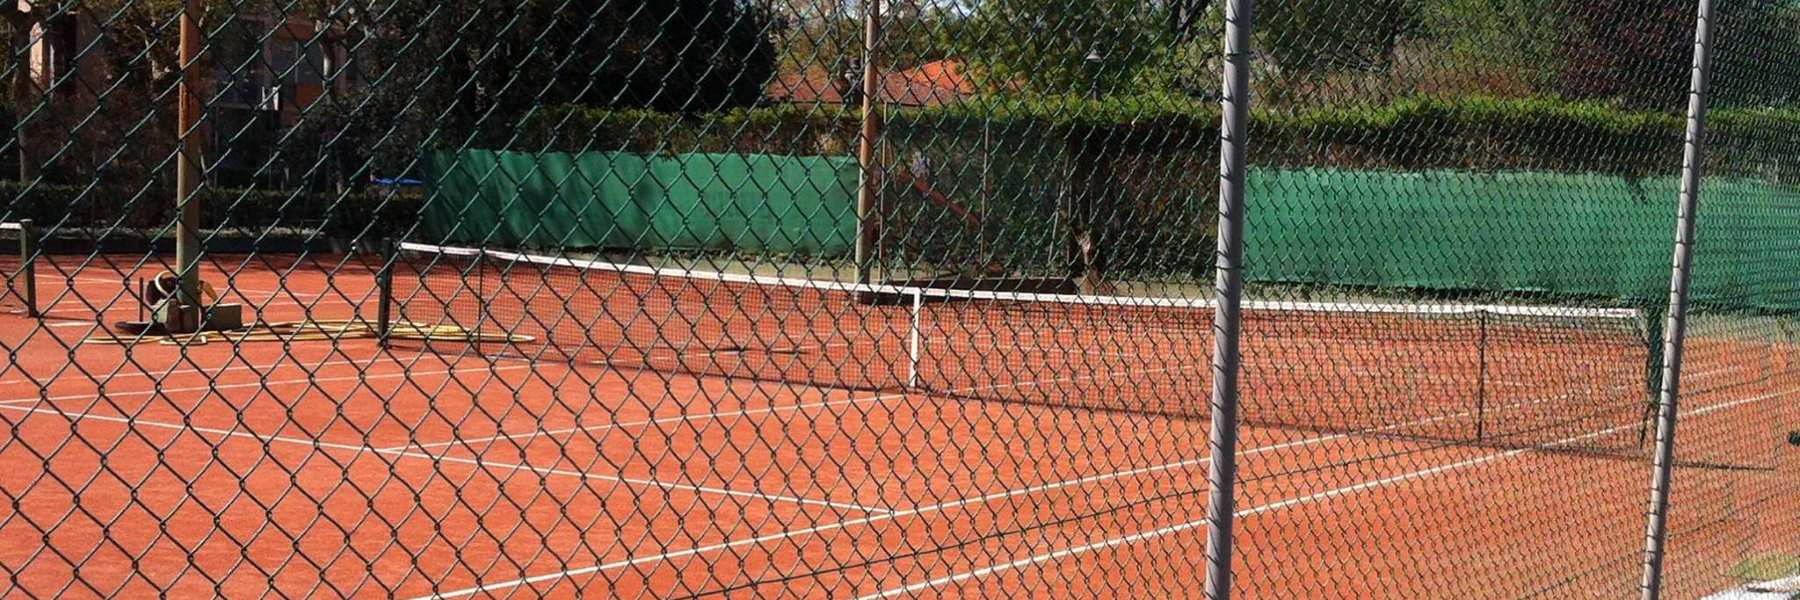 Tennis in Bianco & Legno